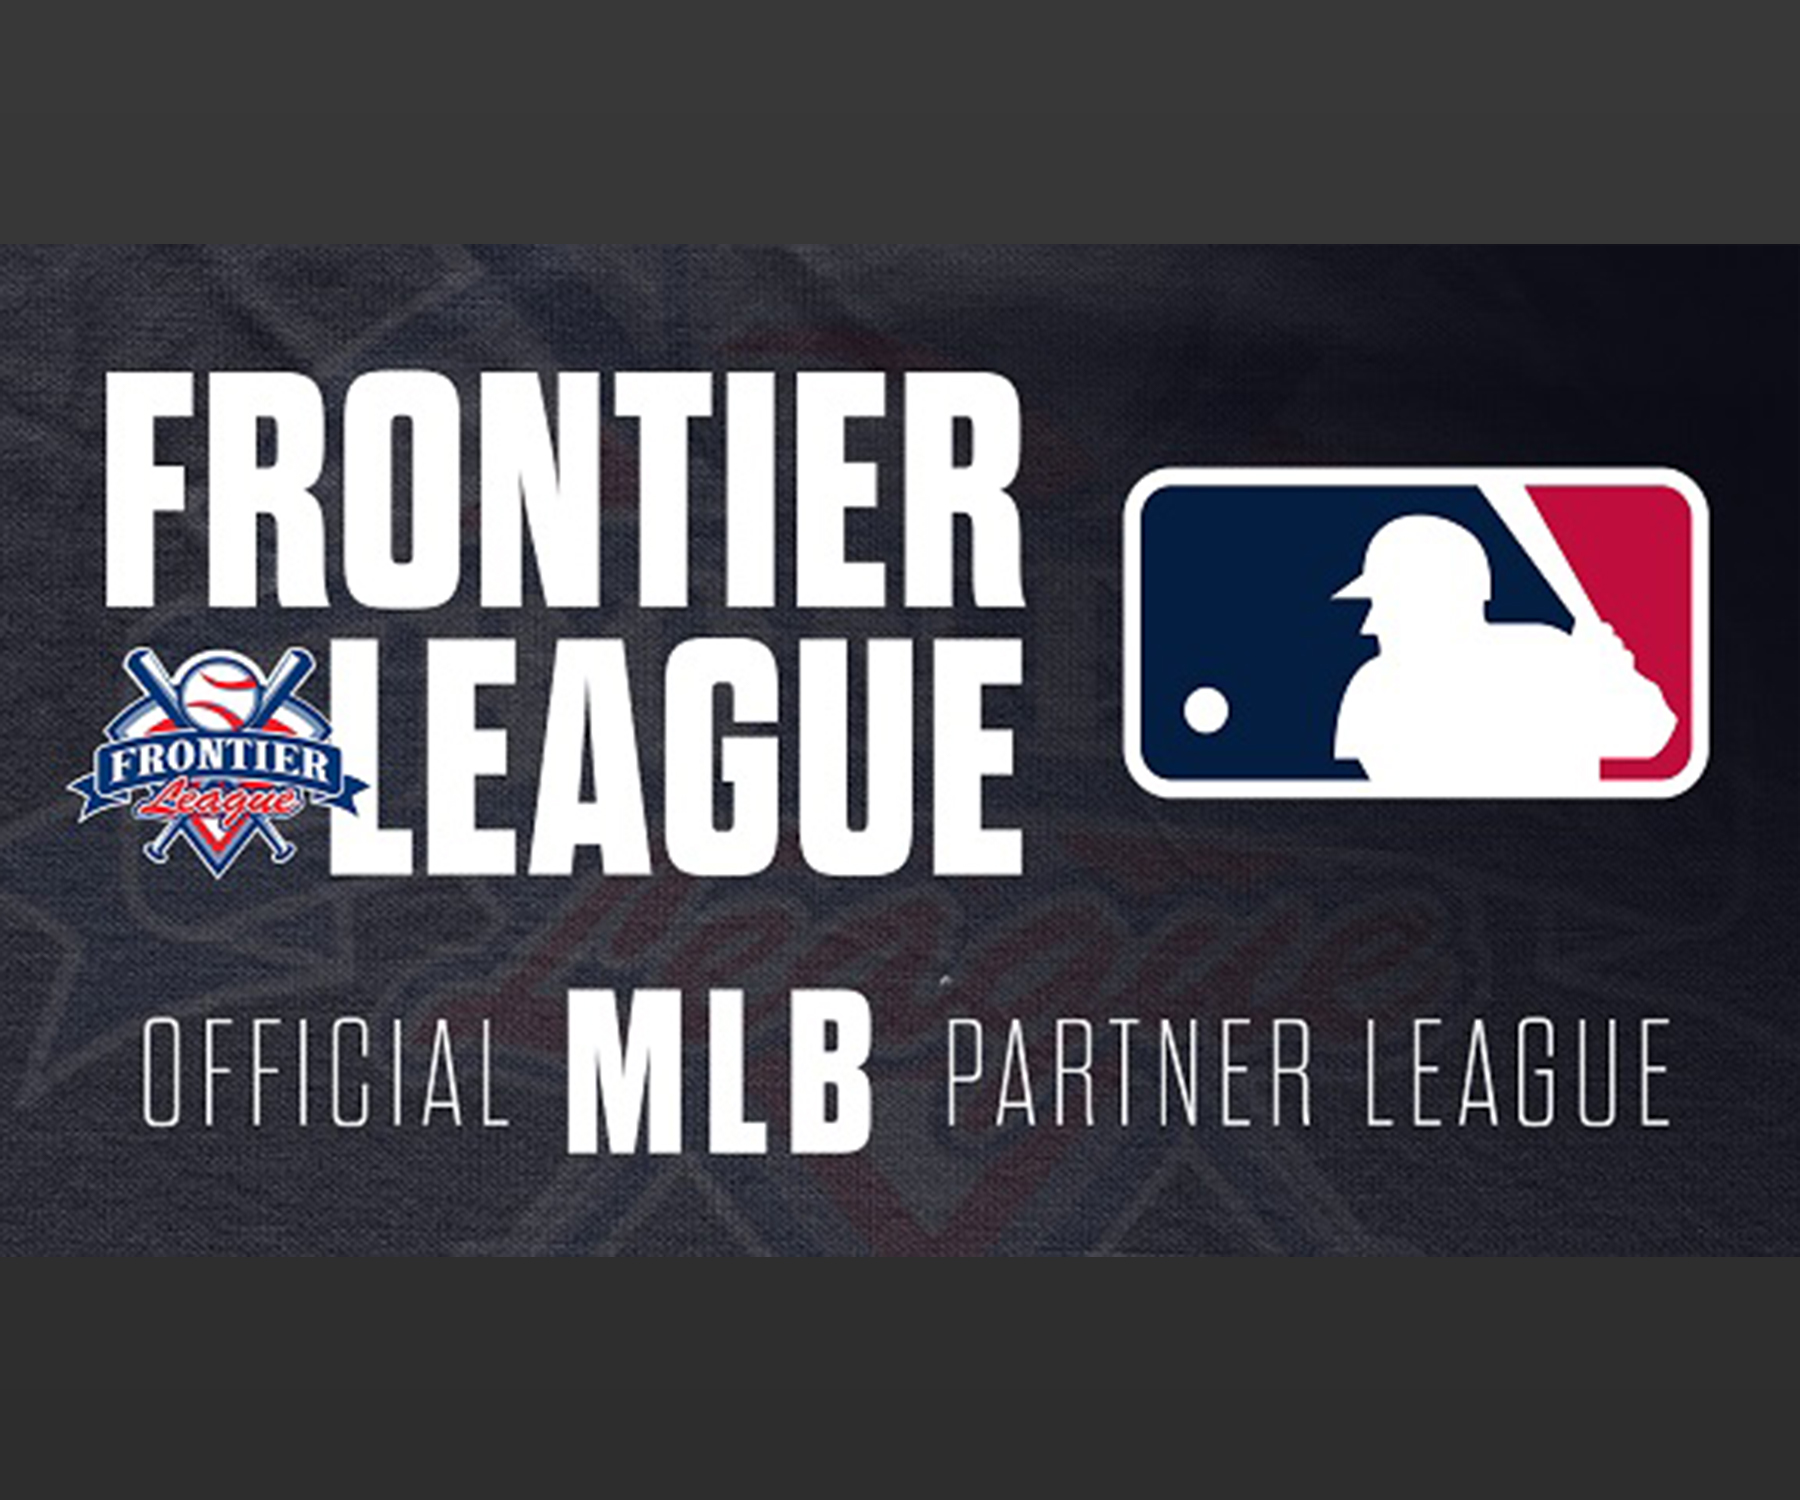 Frontier League Designated as Partner League of MLB